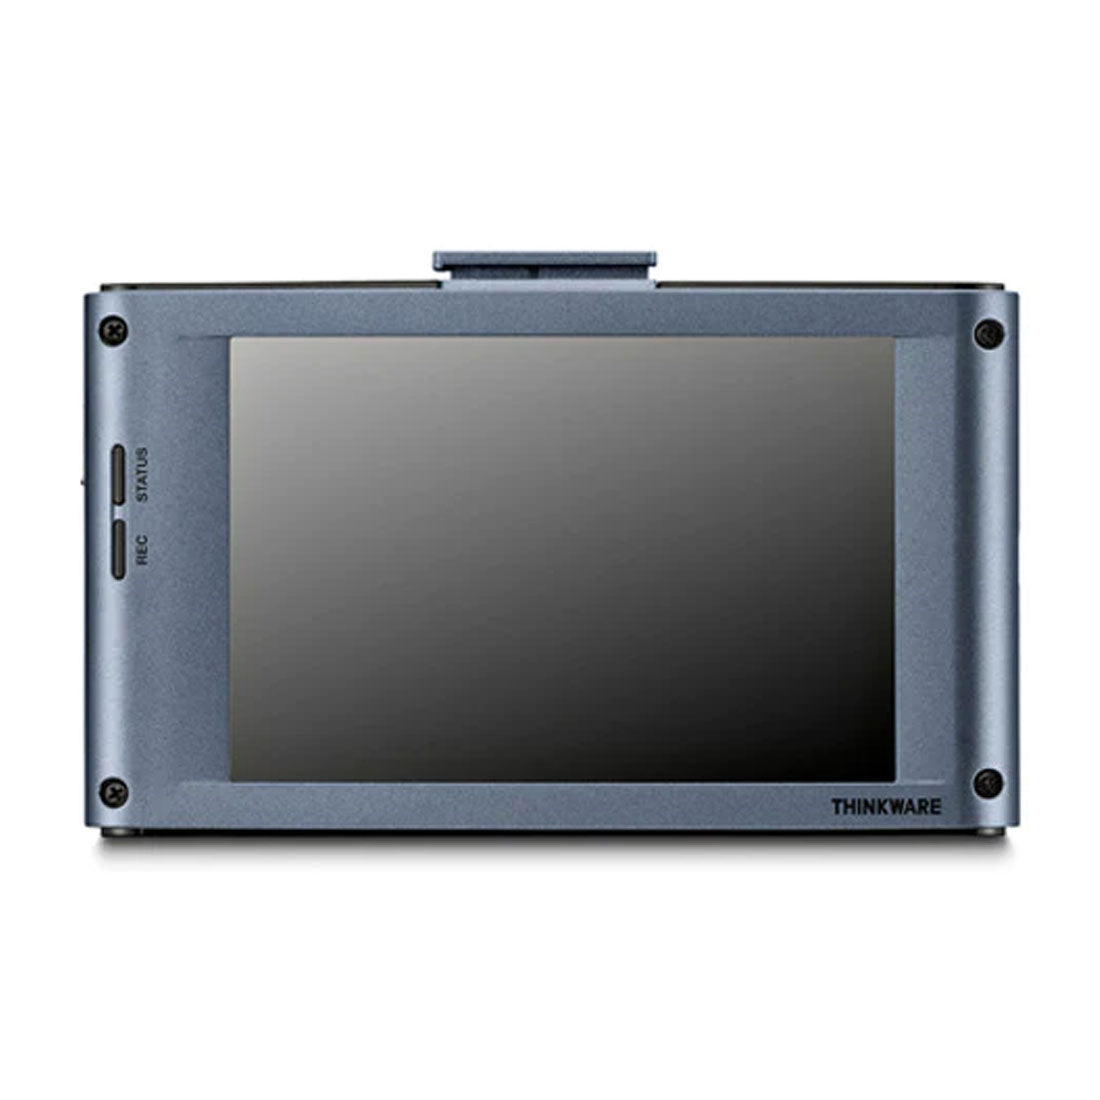 Thinkware X1000D32H Dual-Channel Dash Cam 2K QHD with 3.5” LCD Touchscreen